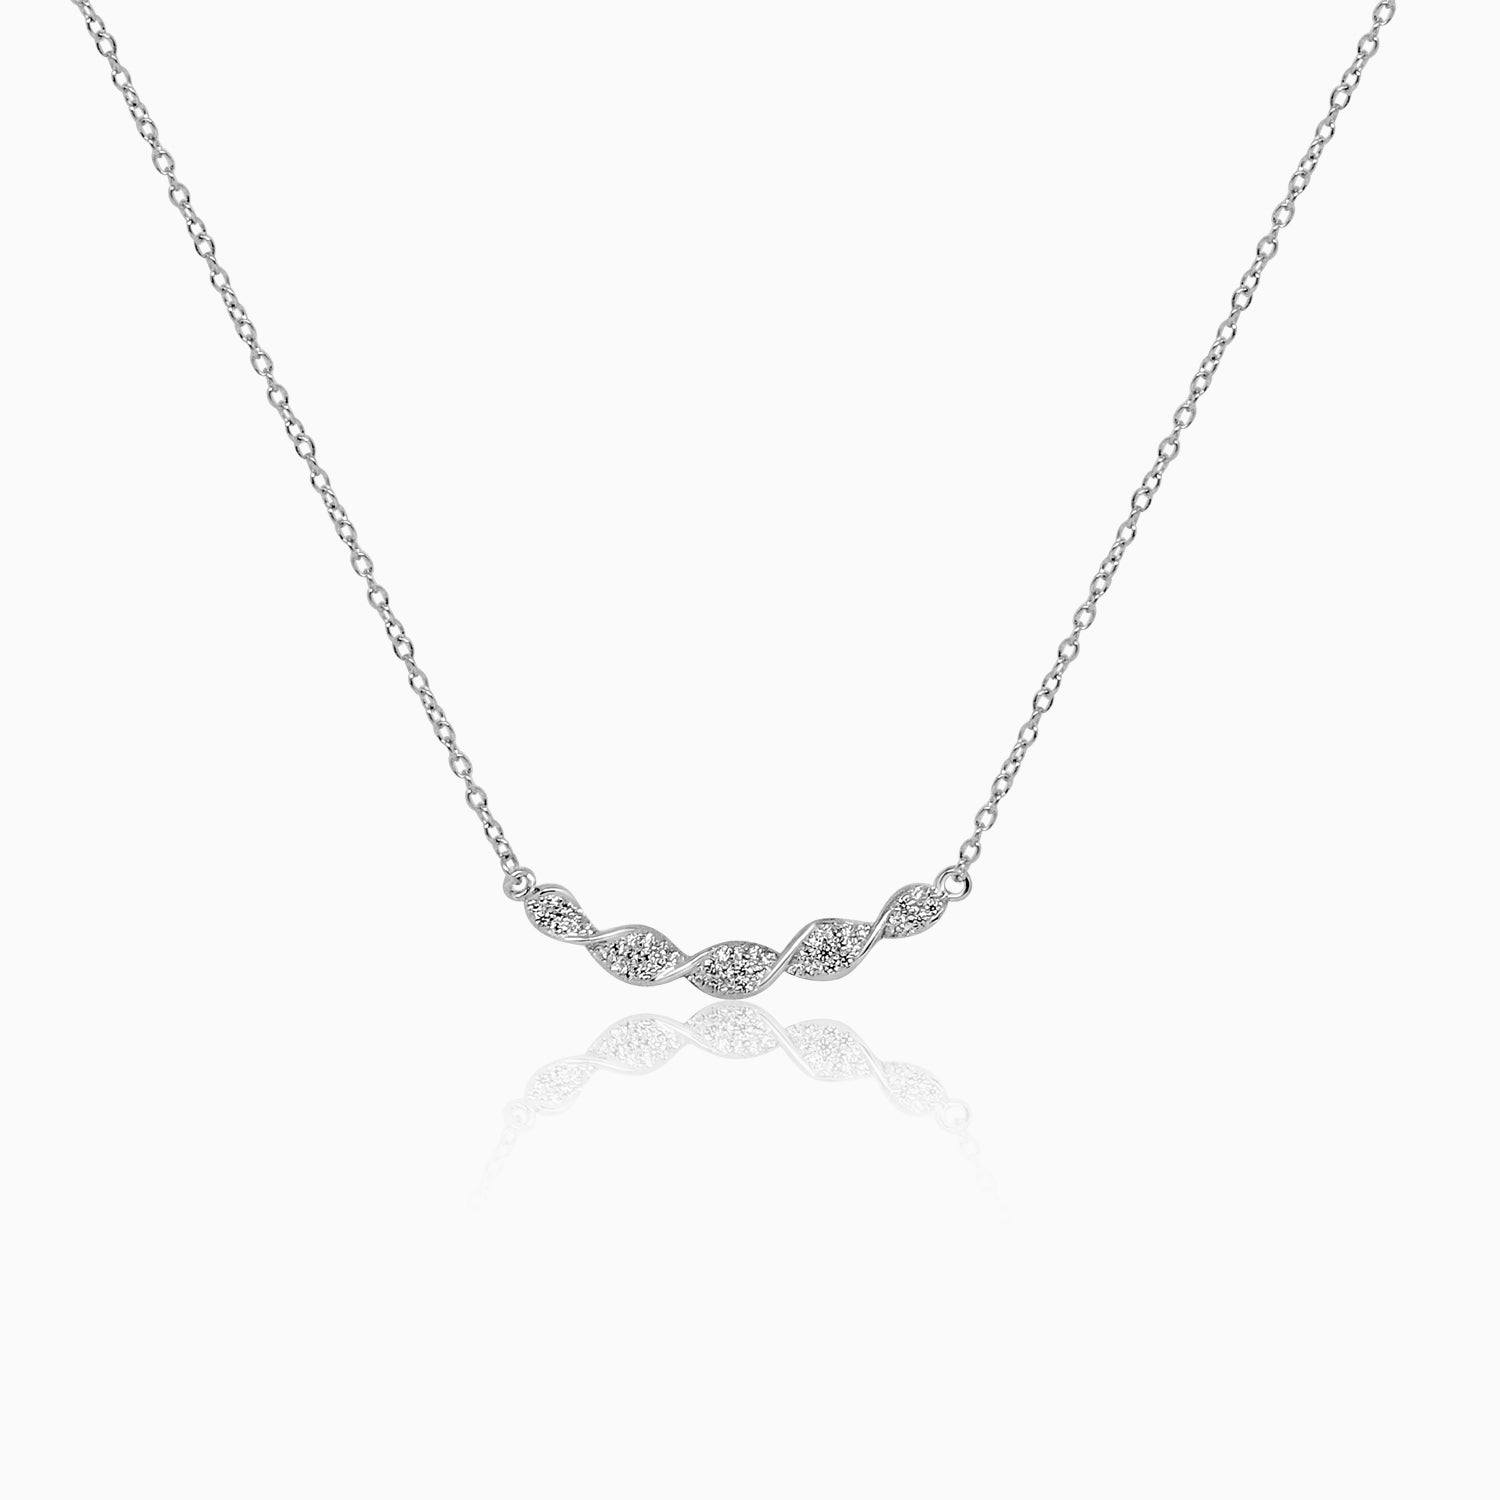 Silver Sparkling Braid Necklace